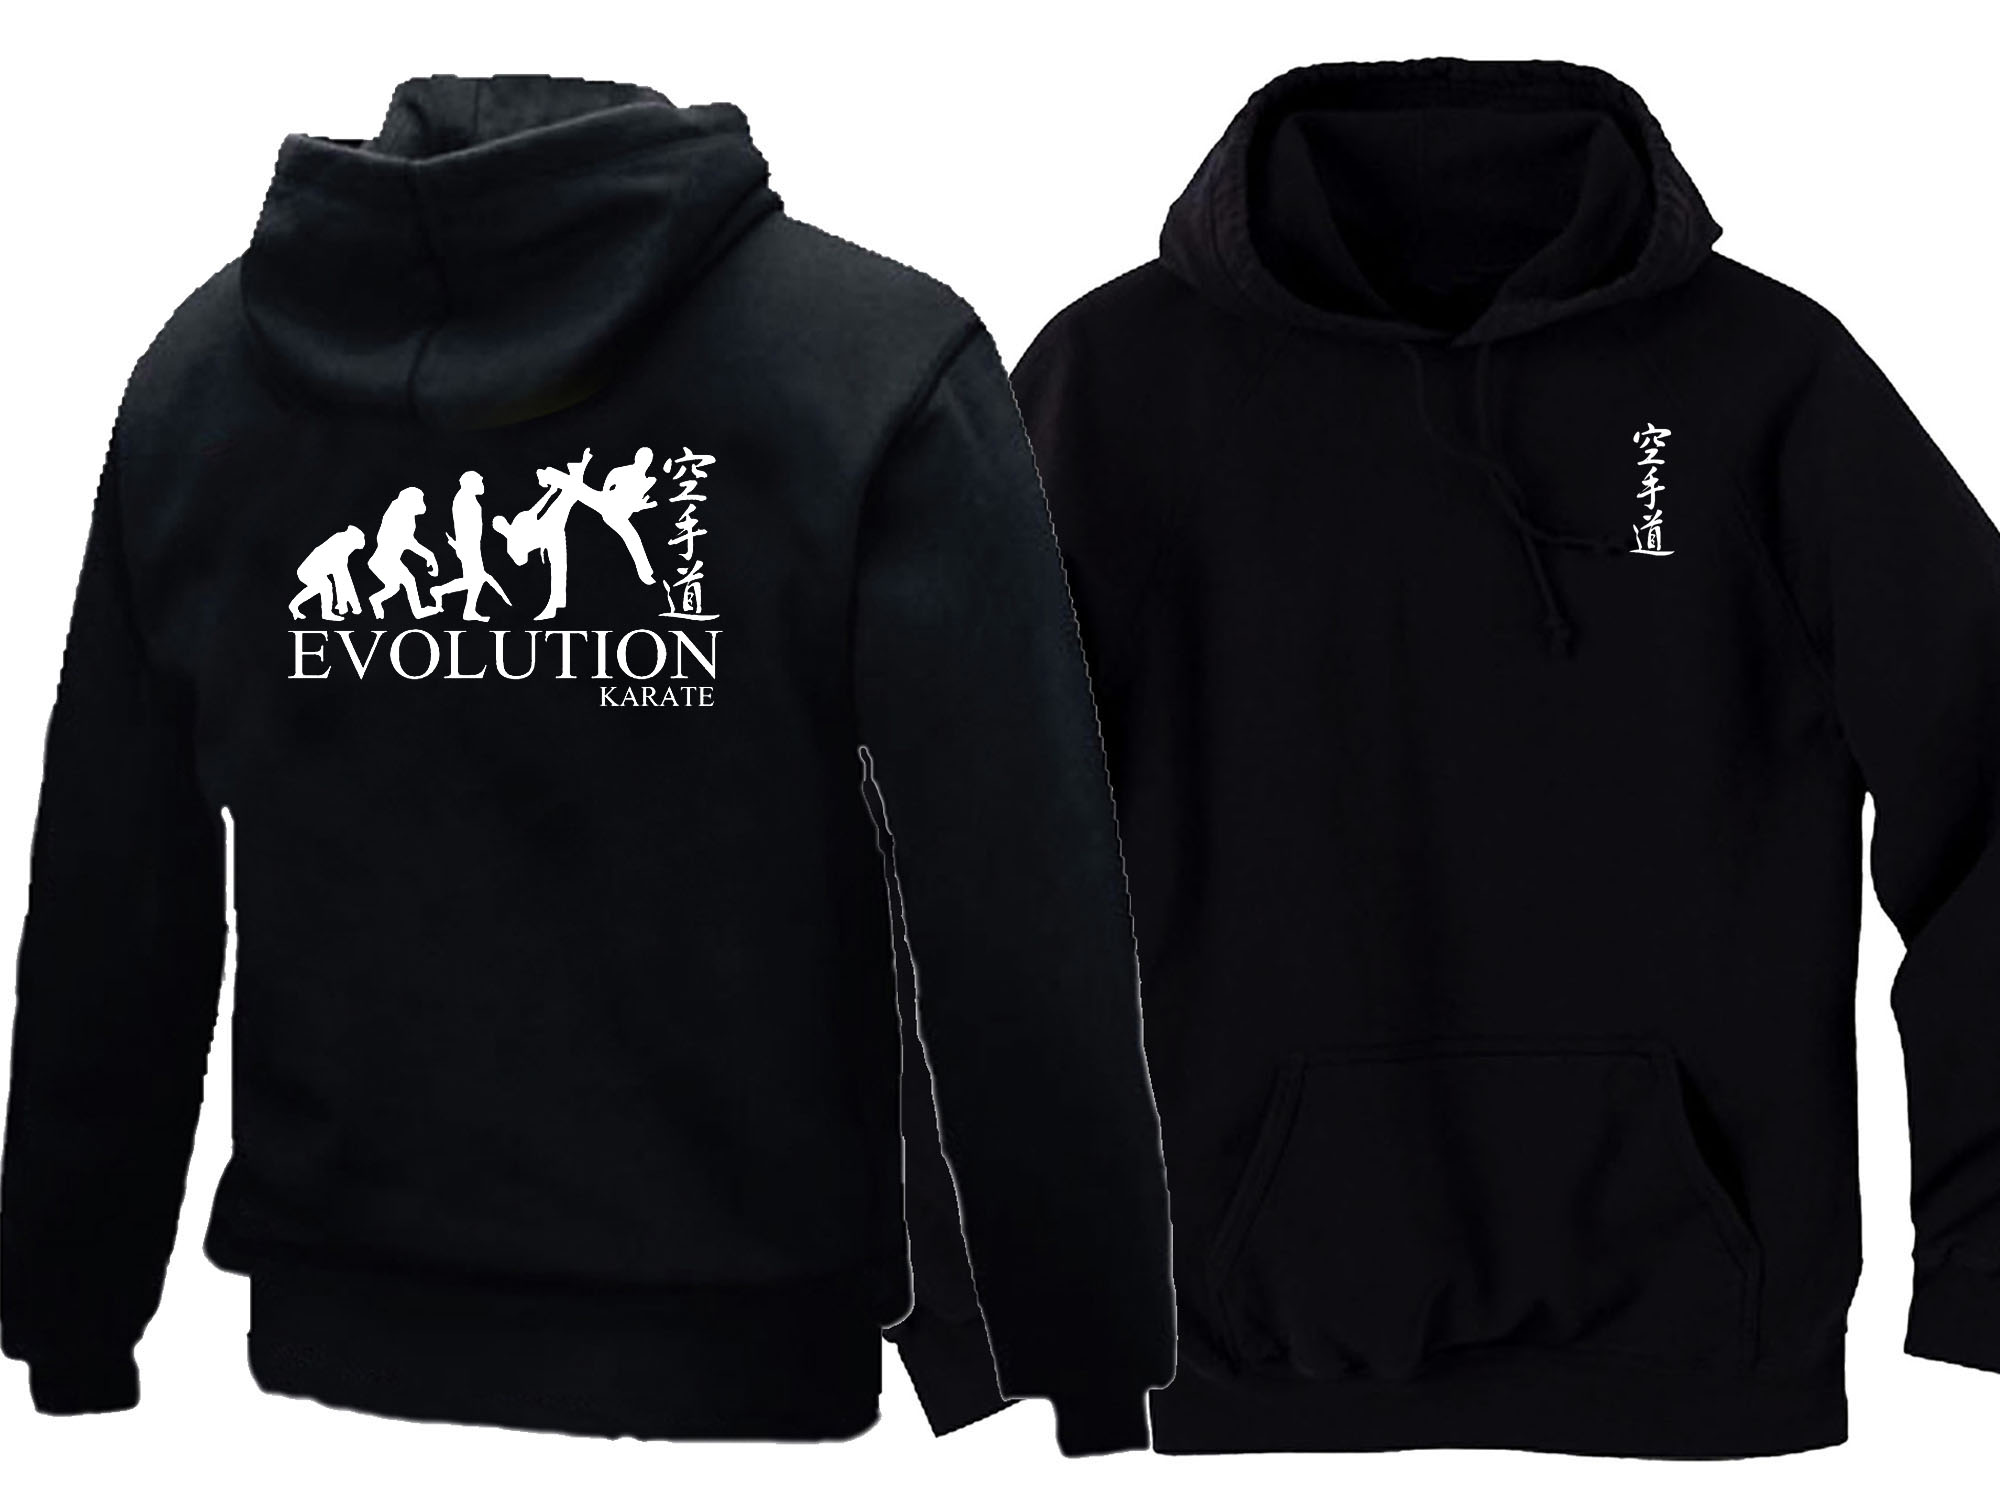 Karate evolution man/women/youth new hoodie